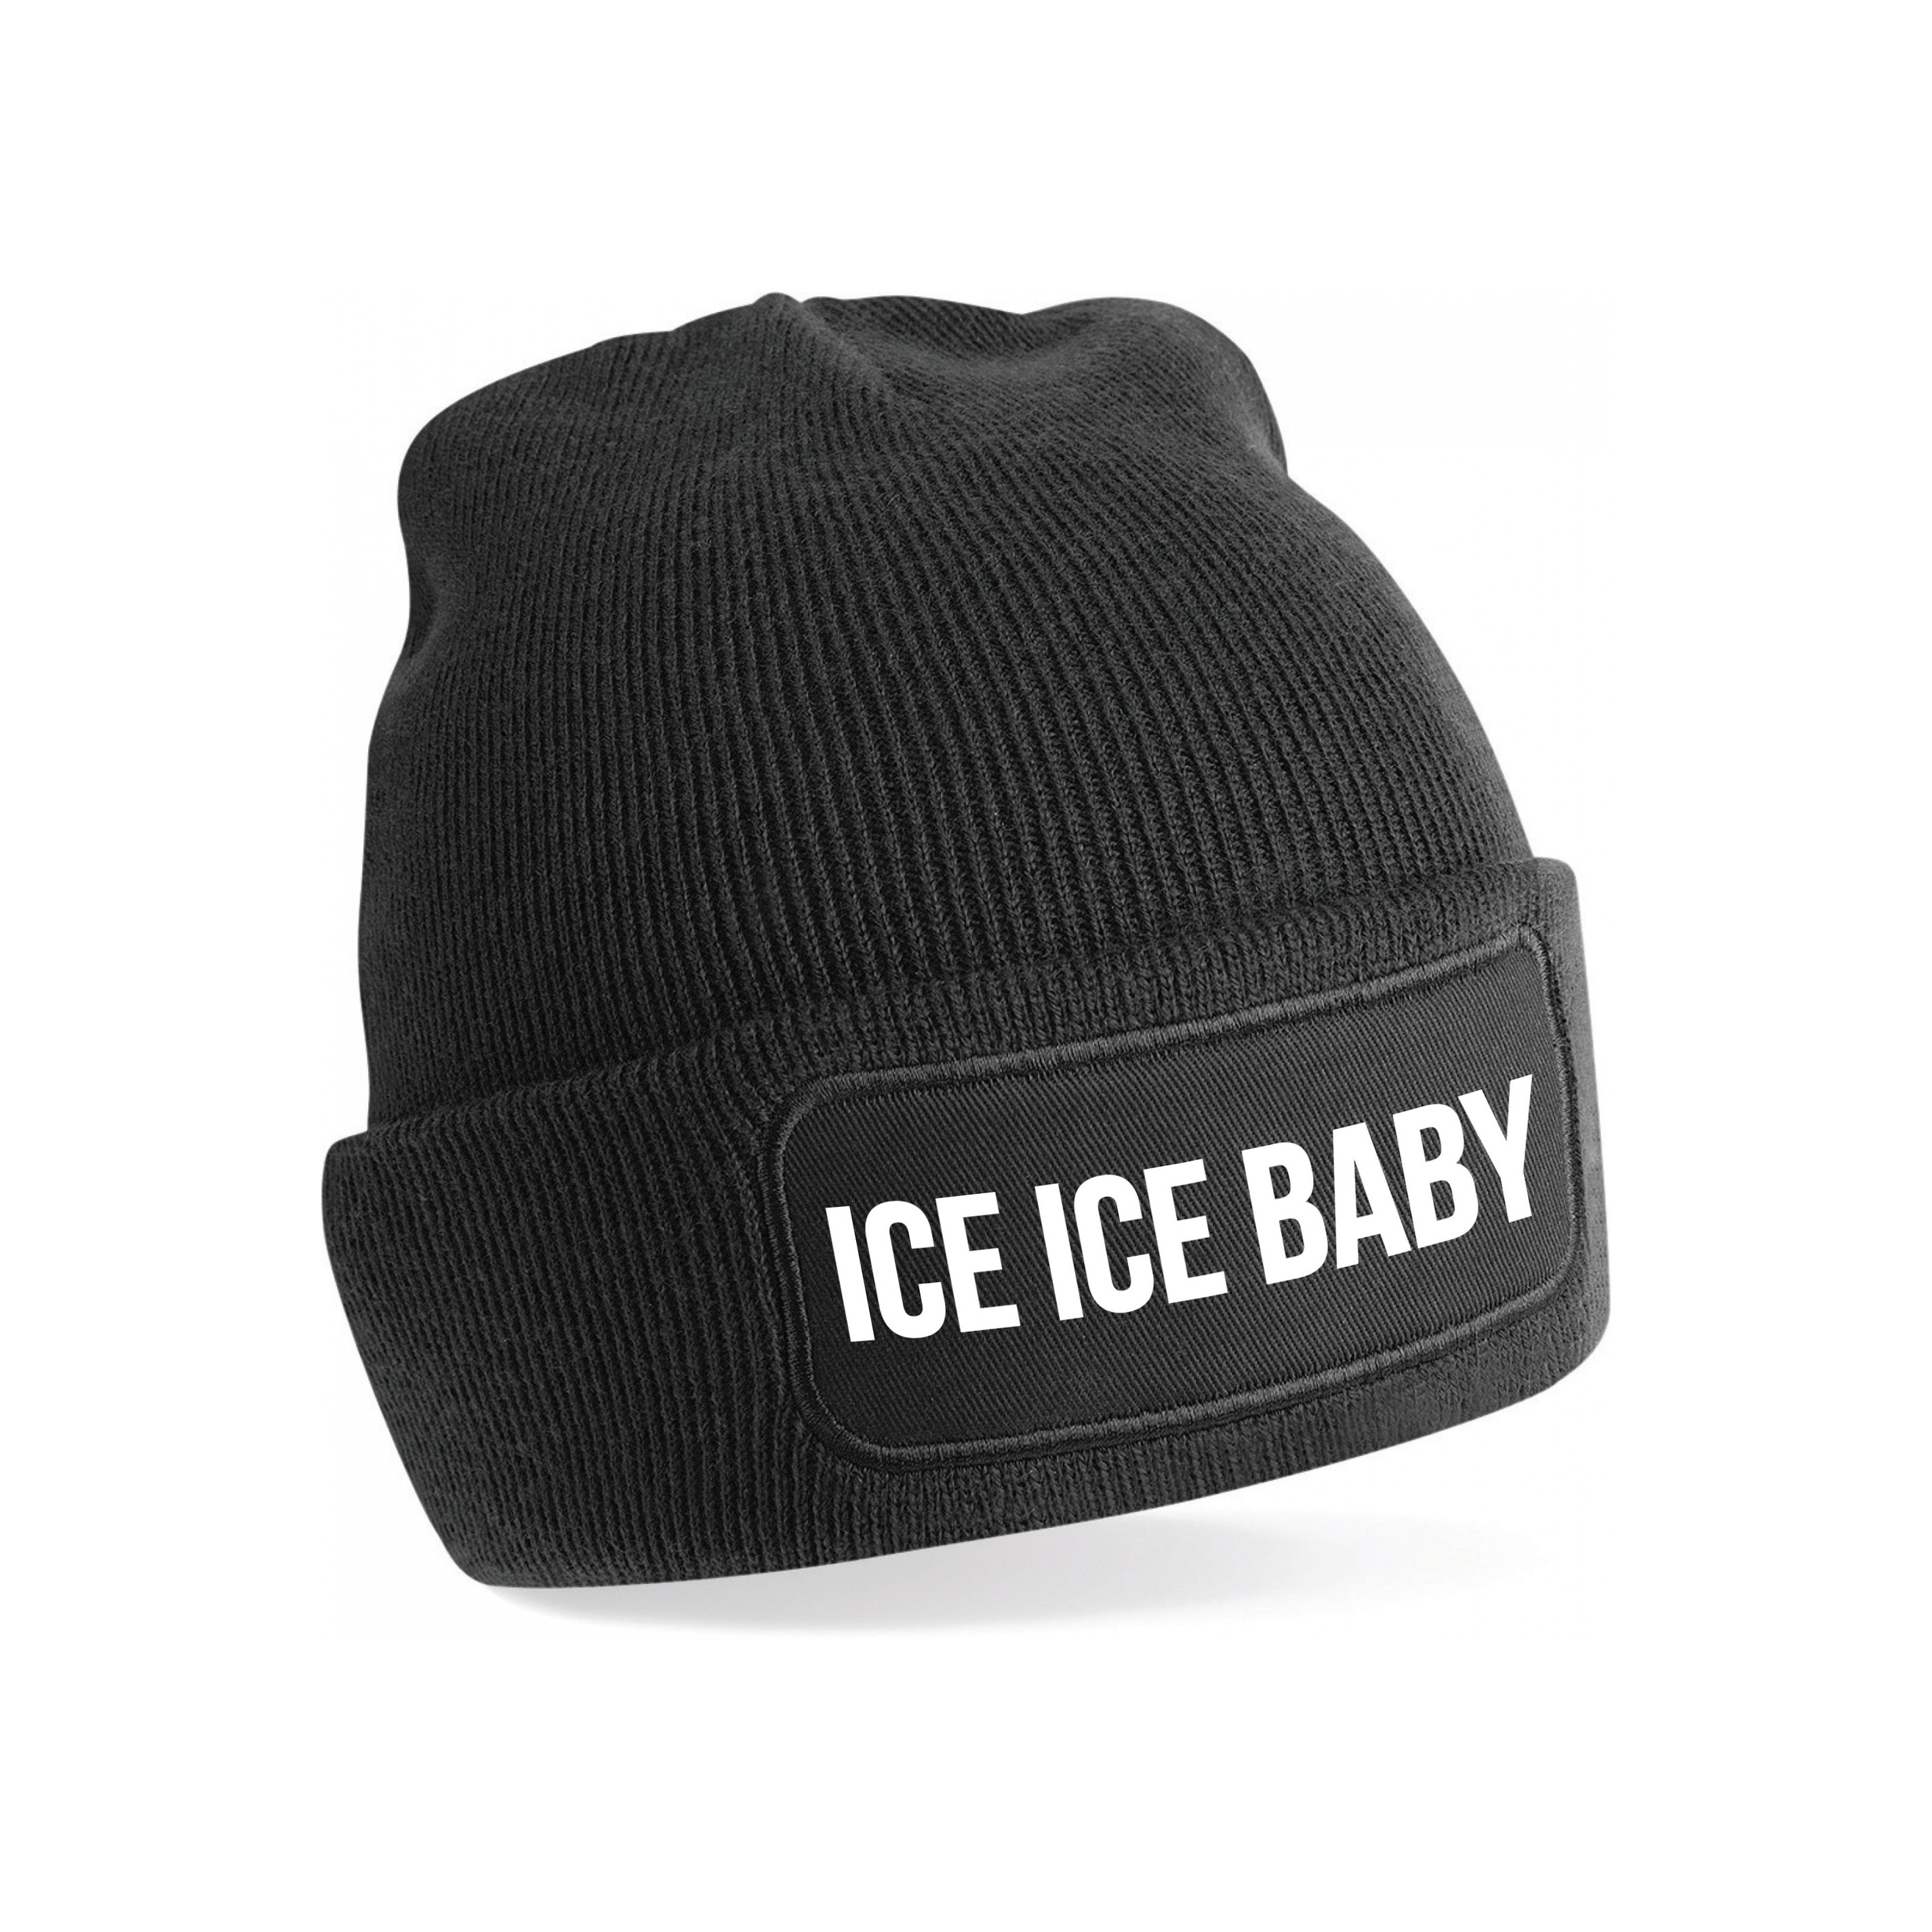 Ice ice baby muts unisex one size zwart